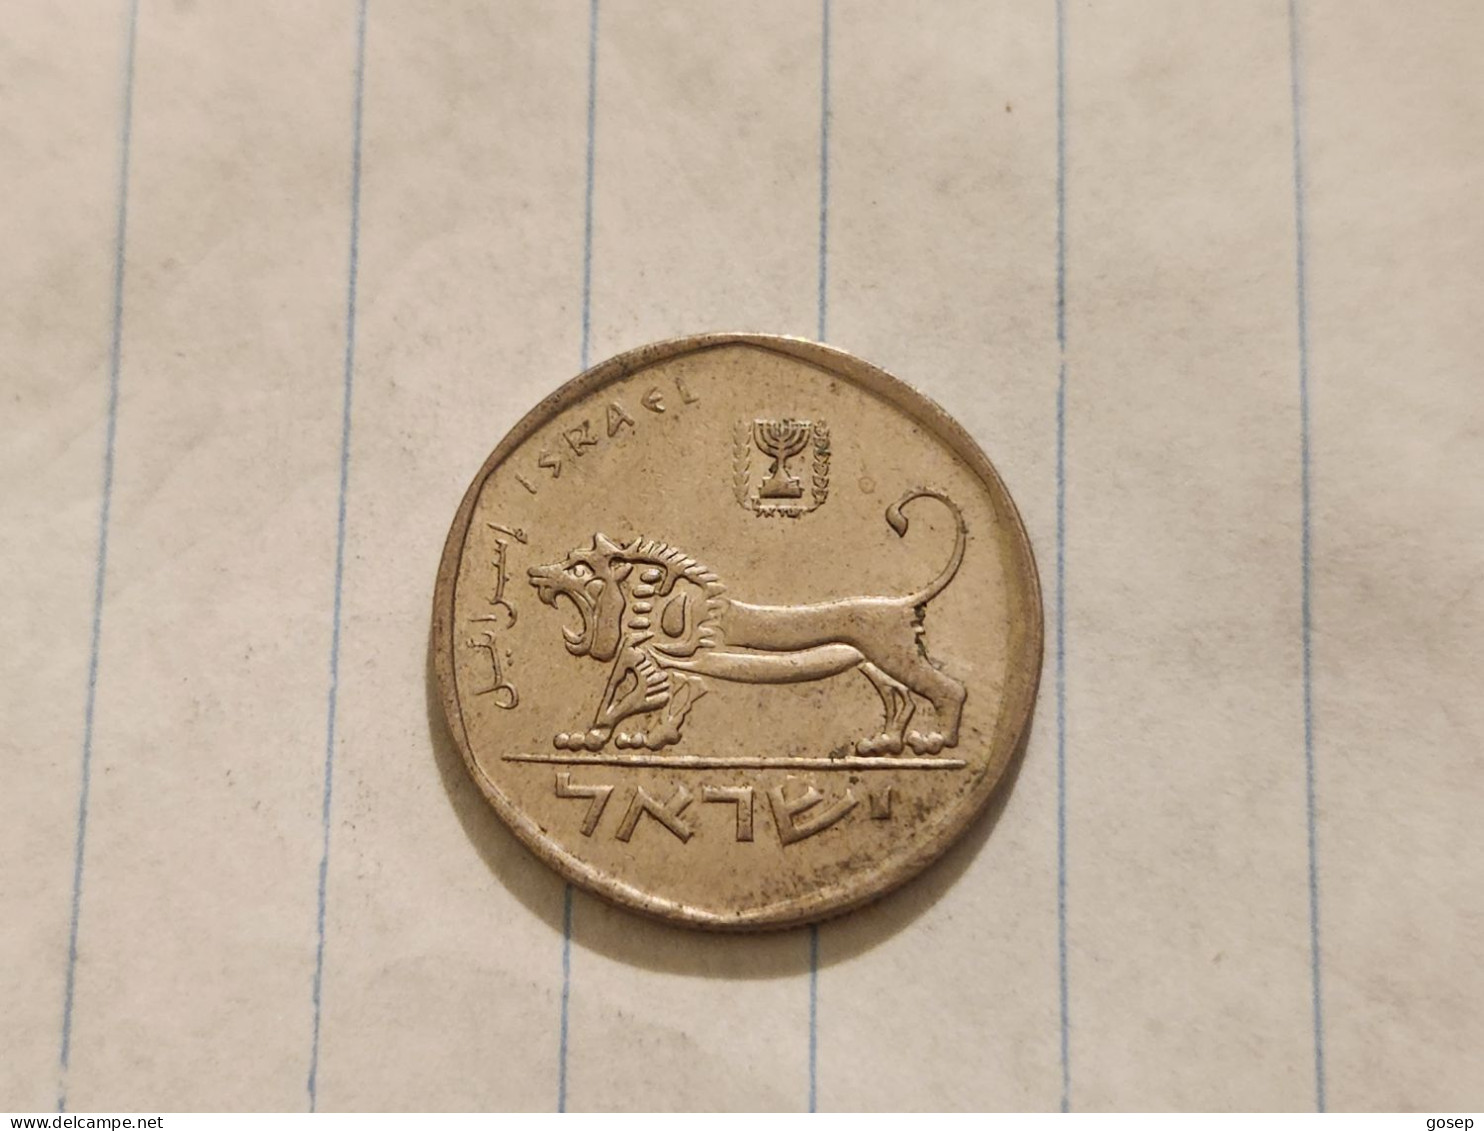 Israel-Coins-SHEKEL(1985-1981)-1/2 SHEKEL-Hapanka 32-(1982)-(28)-תשמ"ב-NIKEL-good - Israël